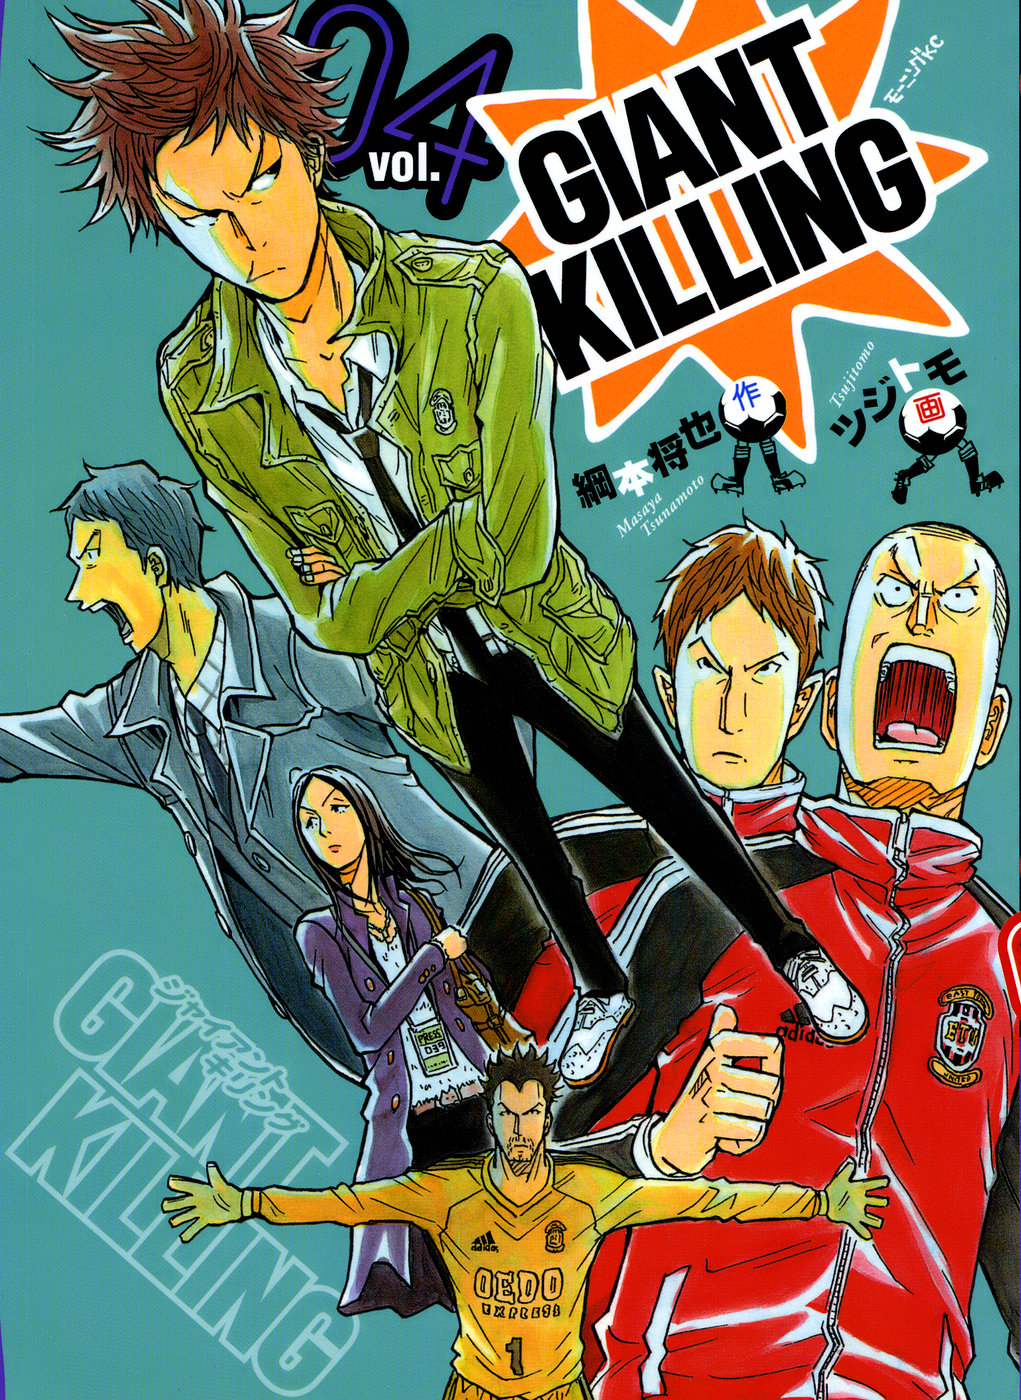 GIANT KILLING 2 (Giant Killing, #2) by Masaya Tsunamoto